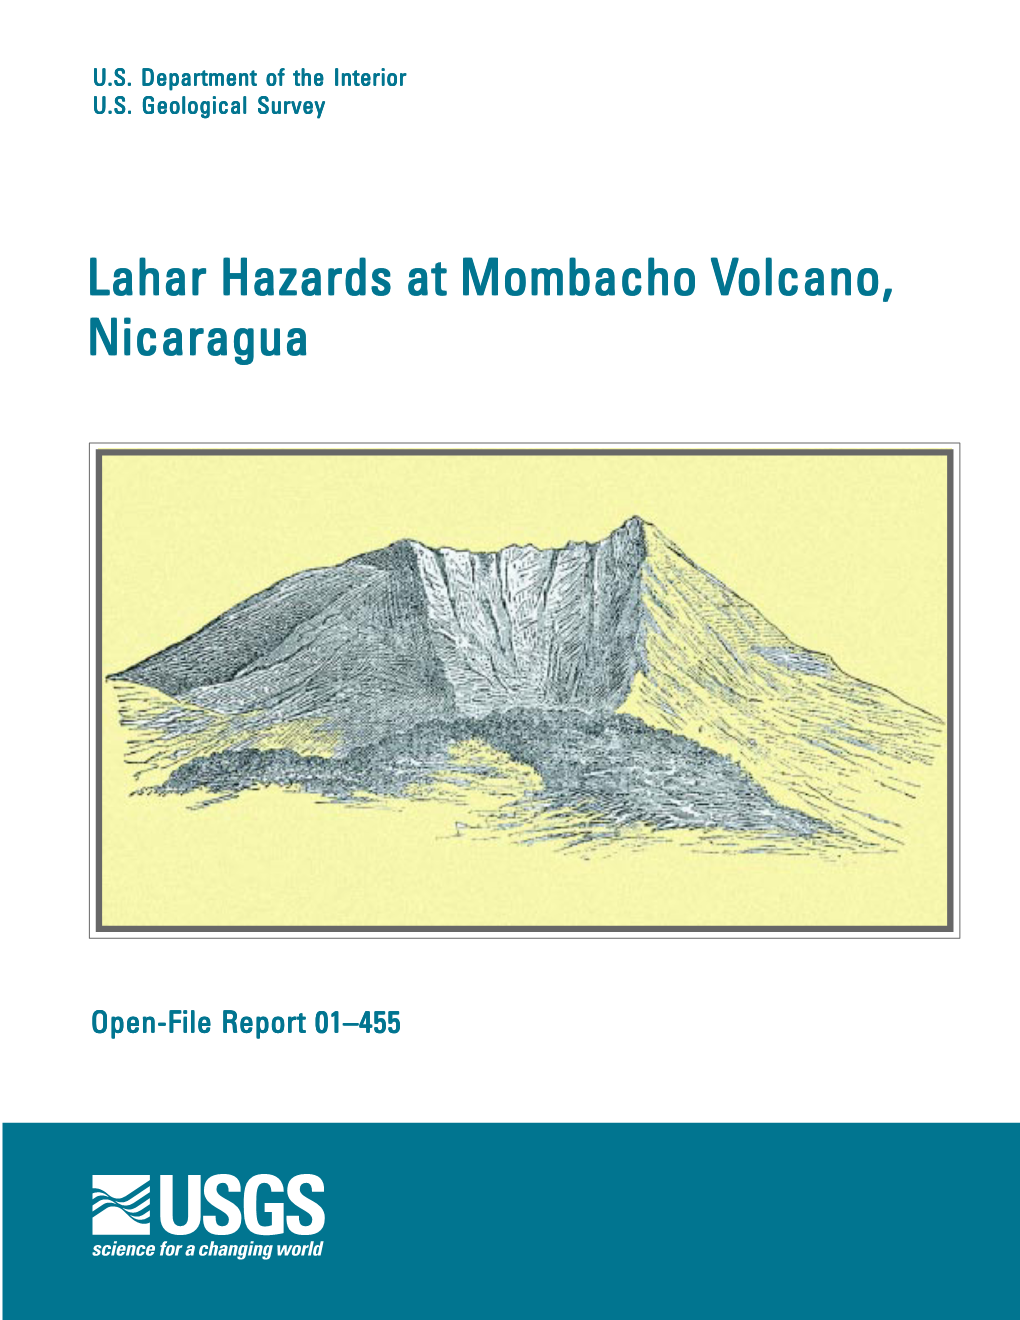 Lahar Hazards at Mombacho Volcano, Nicaragua